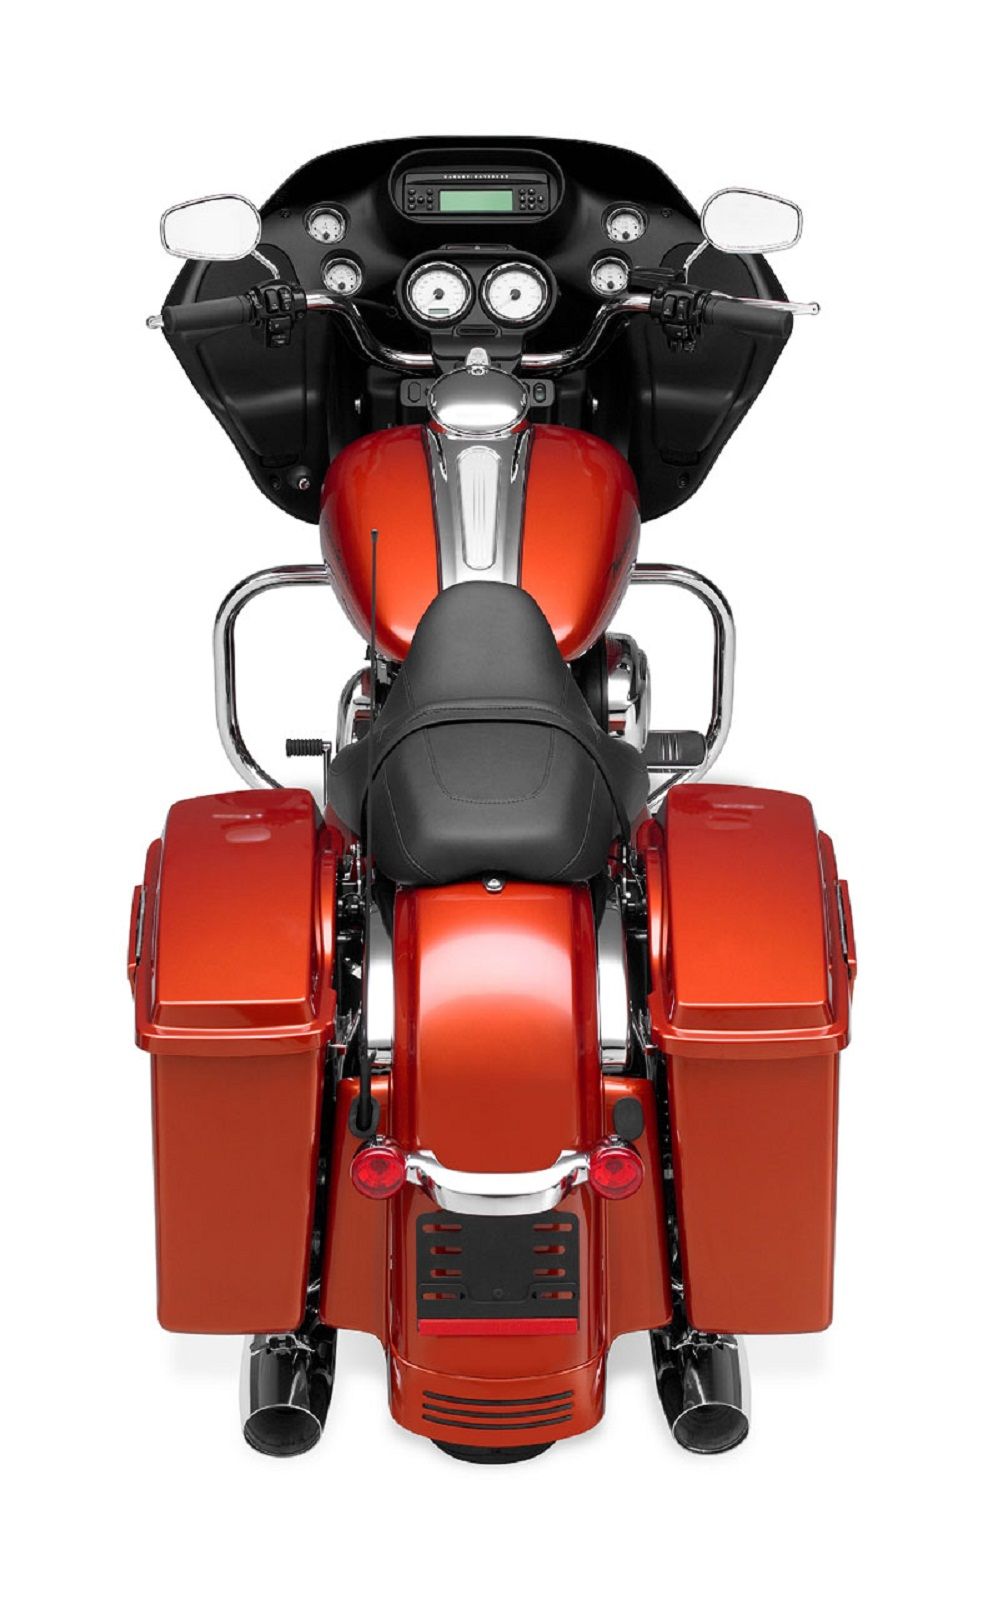 2012 Harley-Davidson Touring FLTRX Road Glide Custom